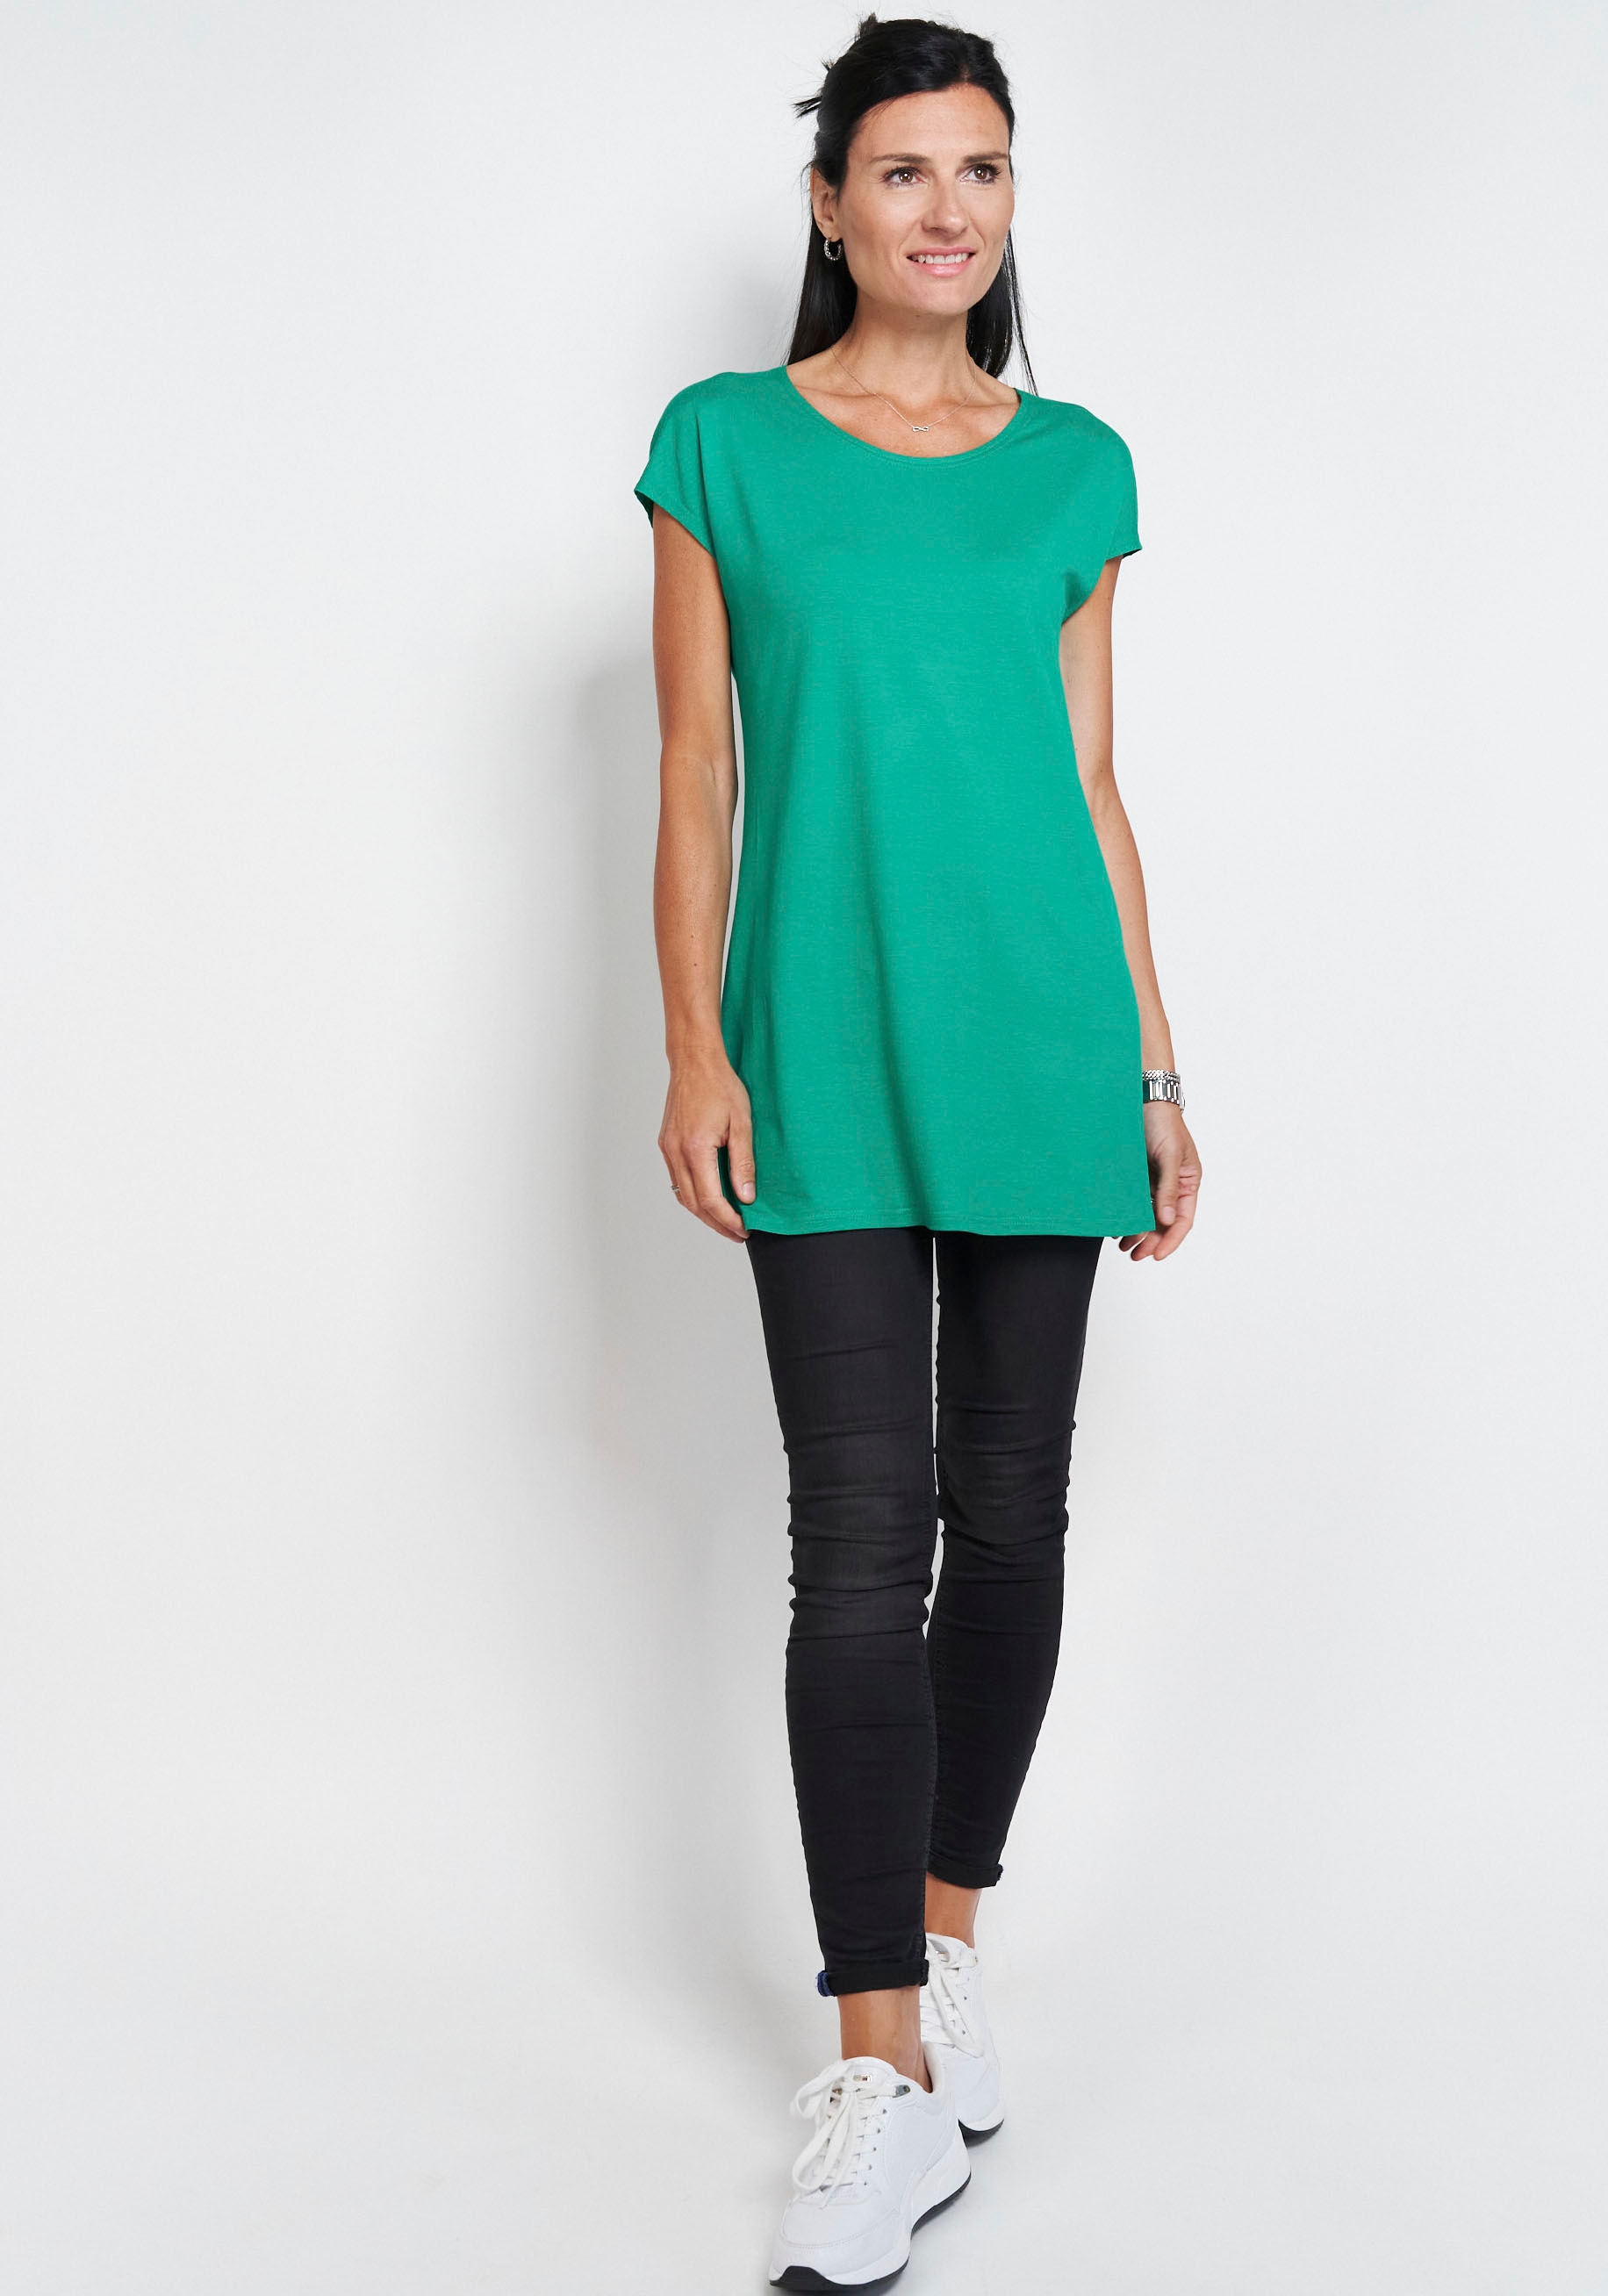 Seidel Moden Longshirt, in schlichtem Design bei OTTOversand | T-Shirts